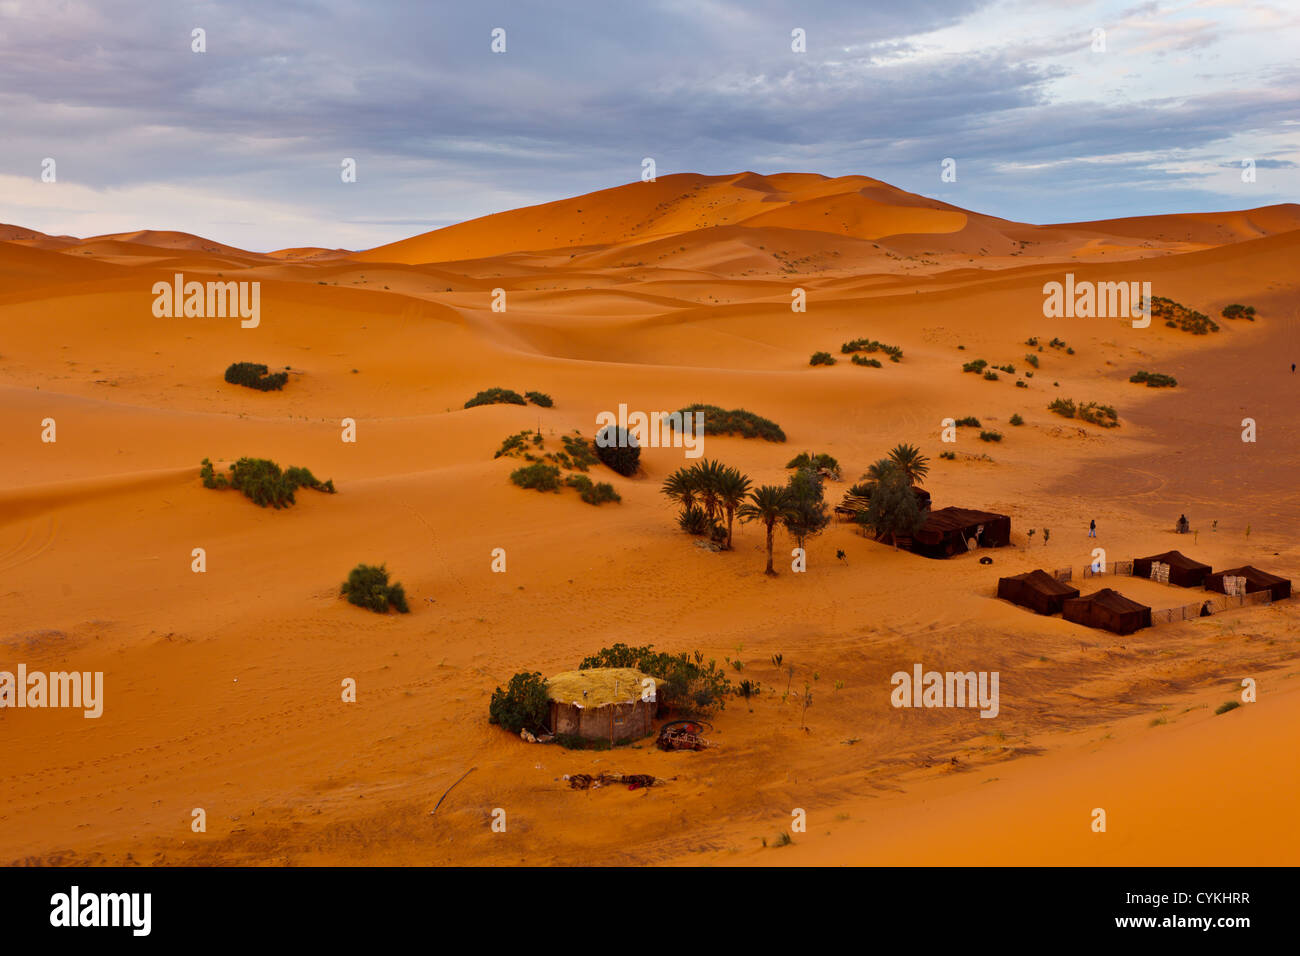 Bedouin encampment on sand dune in an oasis in the Sahara Desert Morocco. Stock Photo